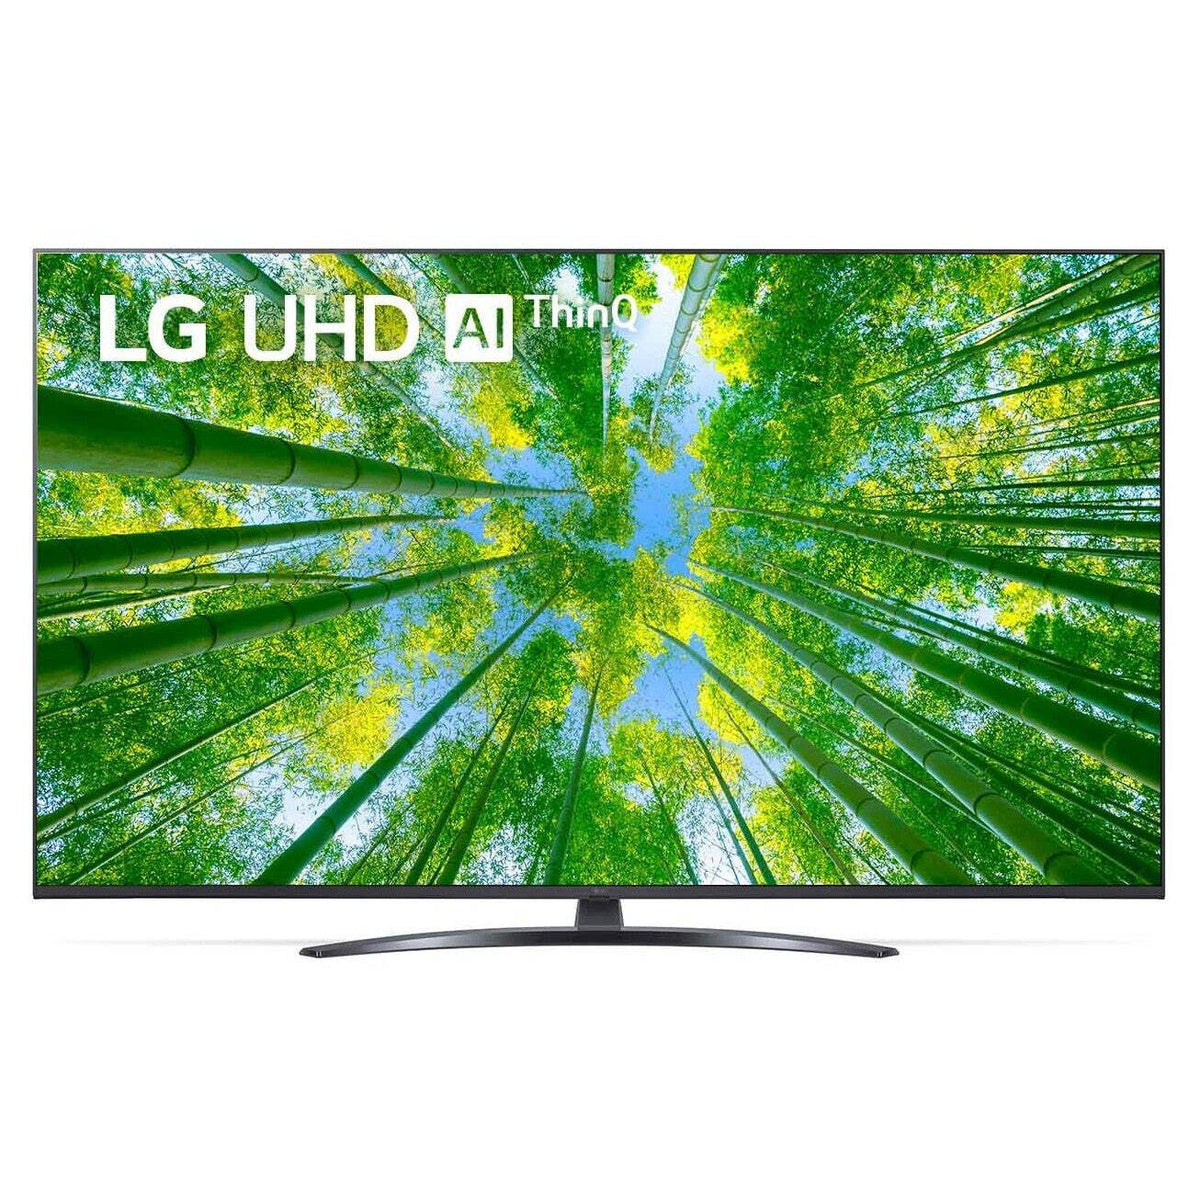 Smart televize LG 60UQ8100 / 60" (153 cm)